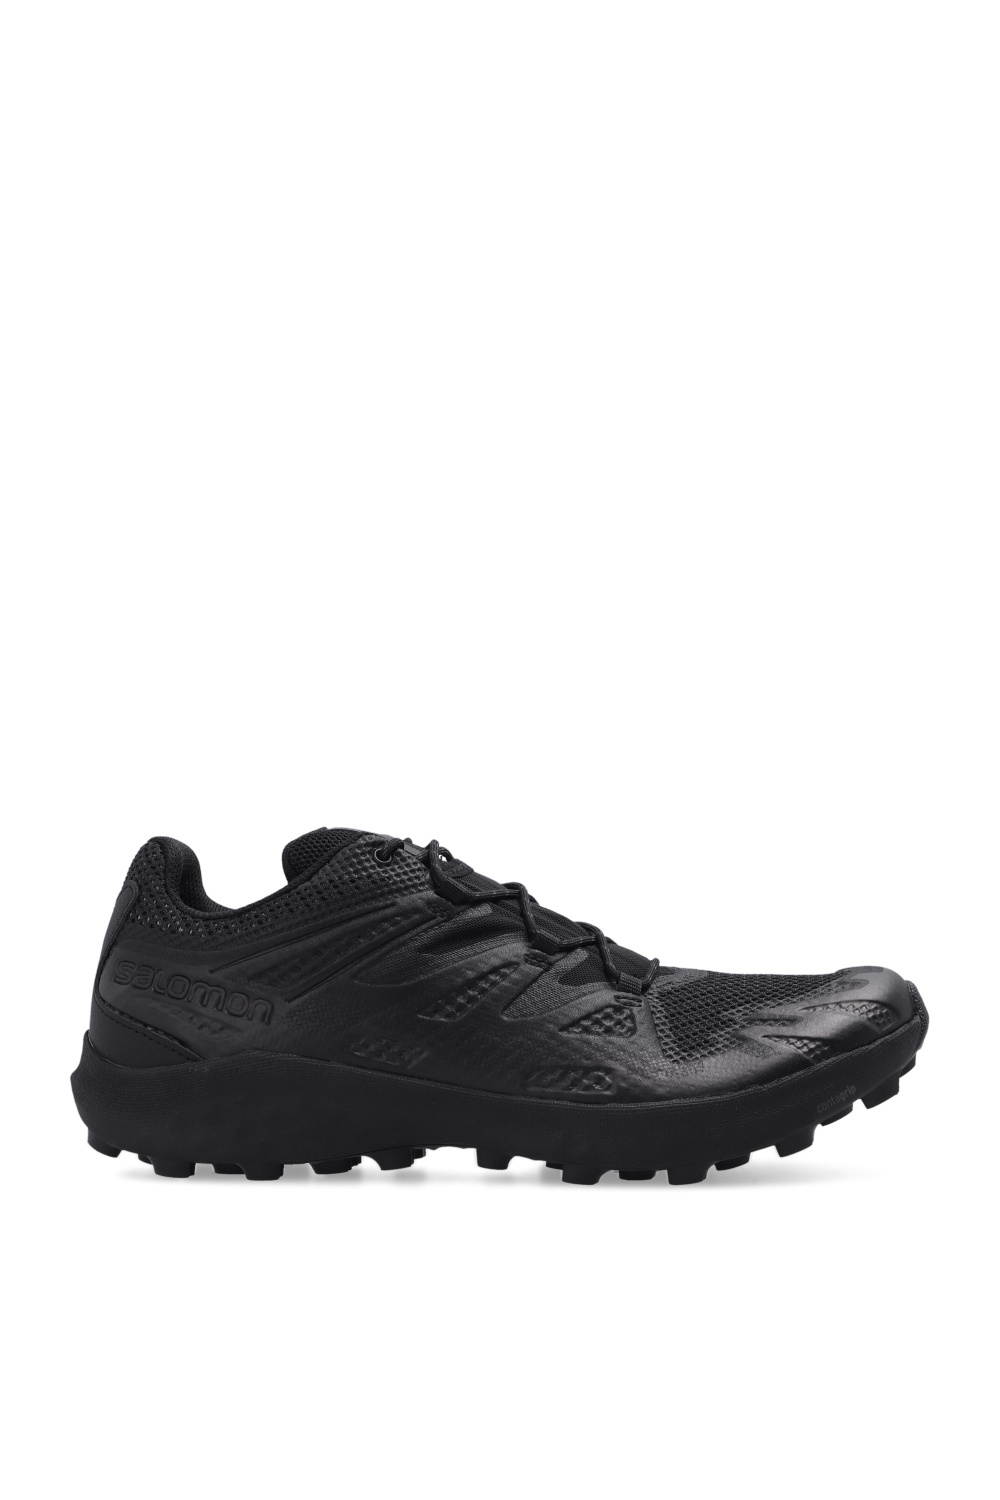 Salomon Xa Pro 3d V8 Gore-tex negro zapatillas trail running